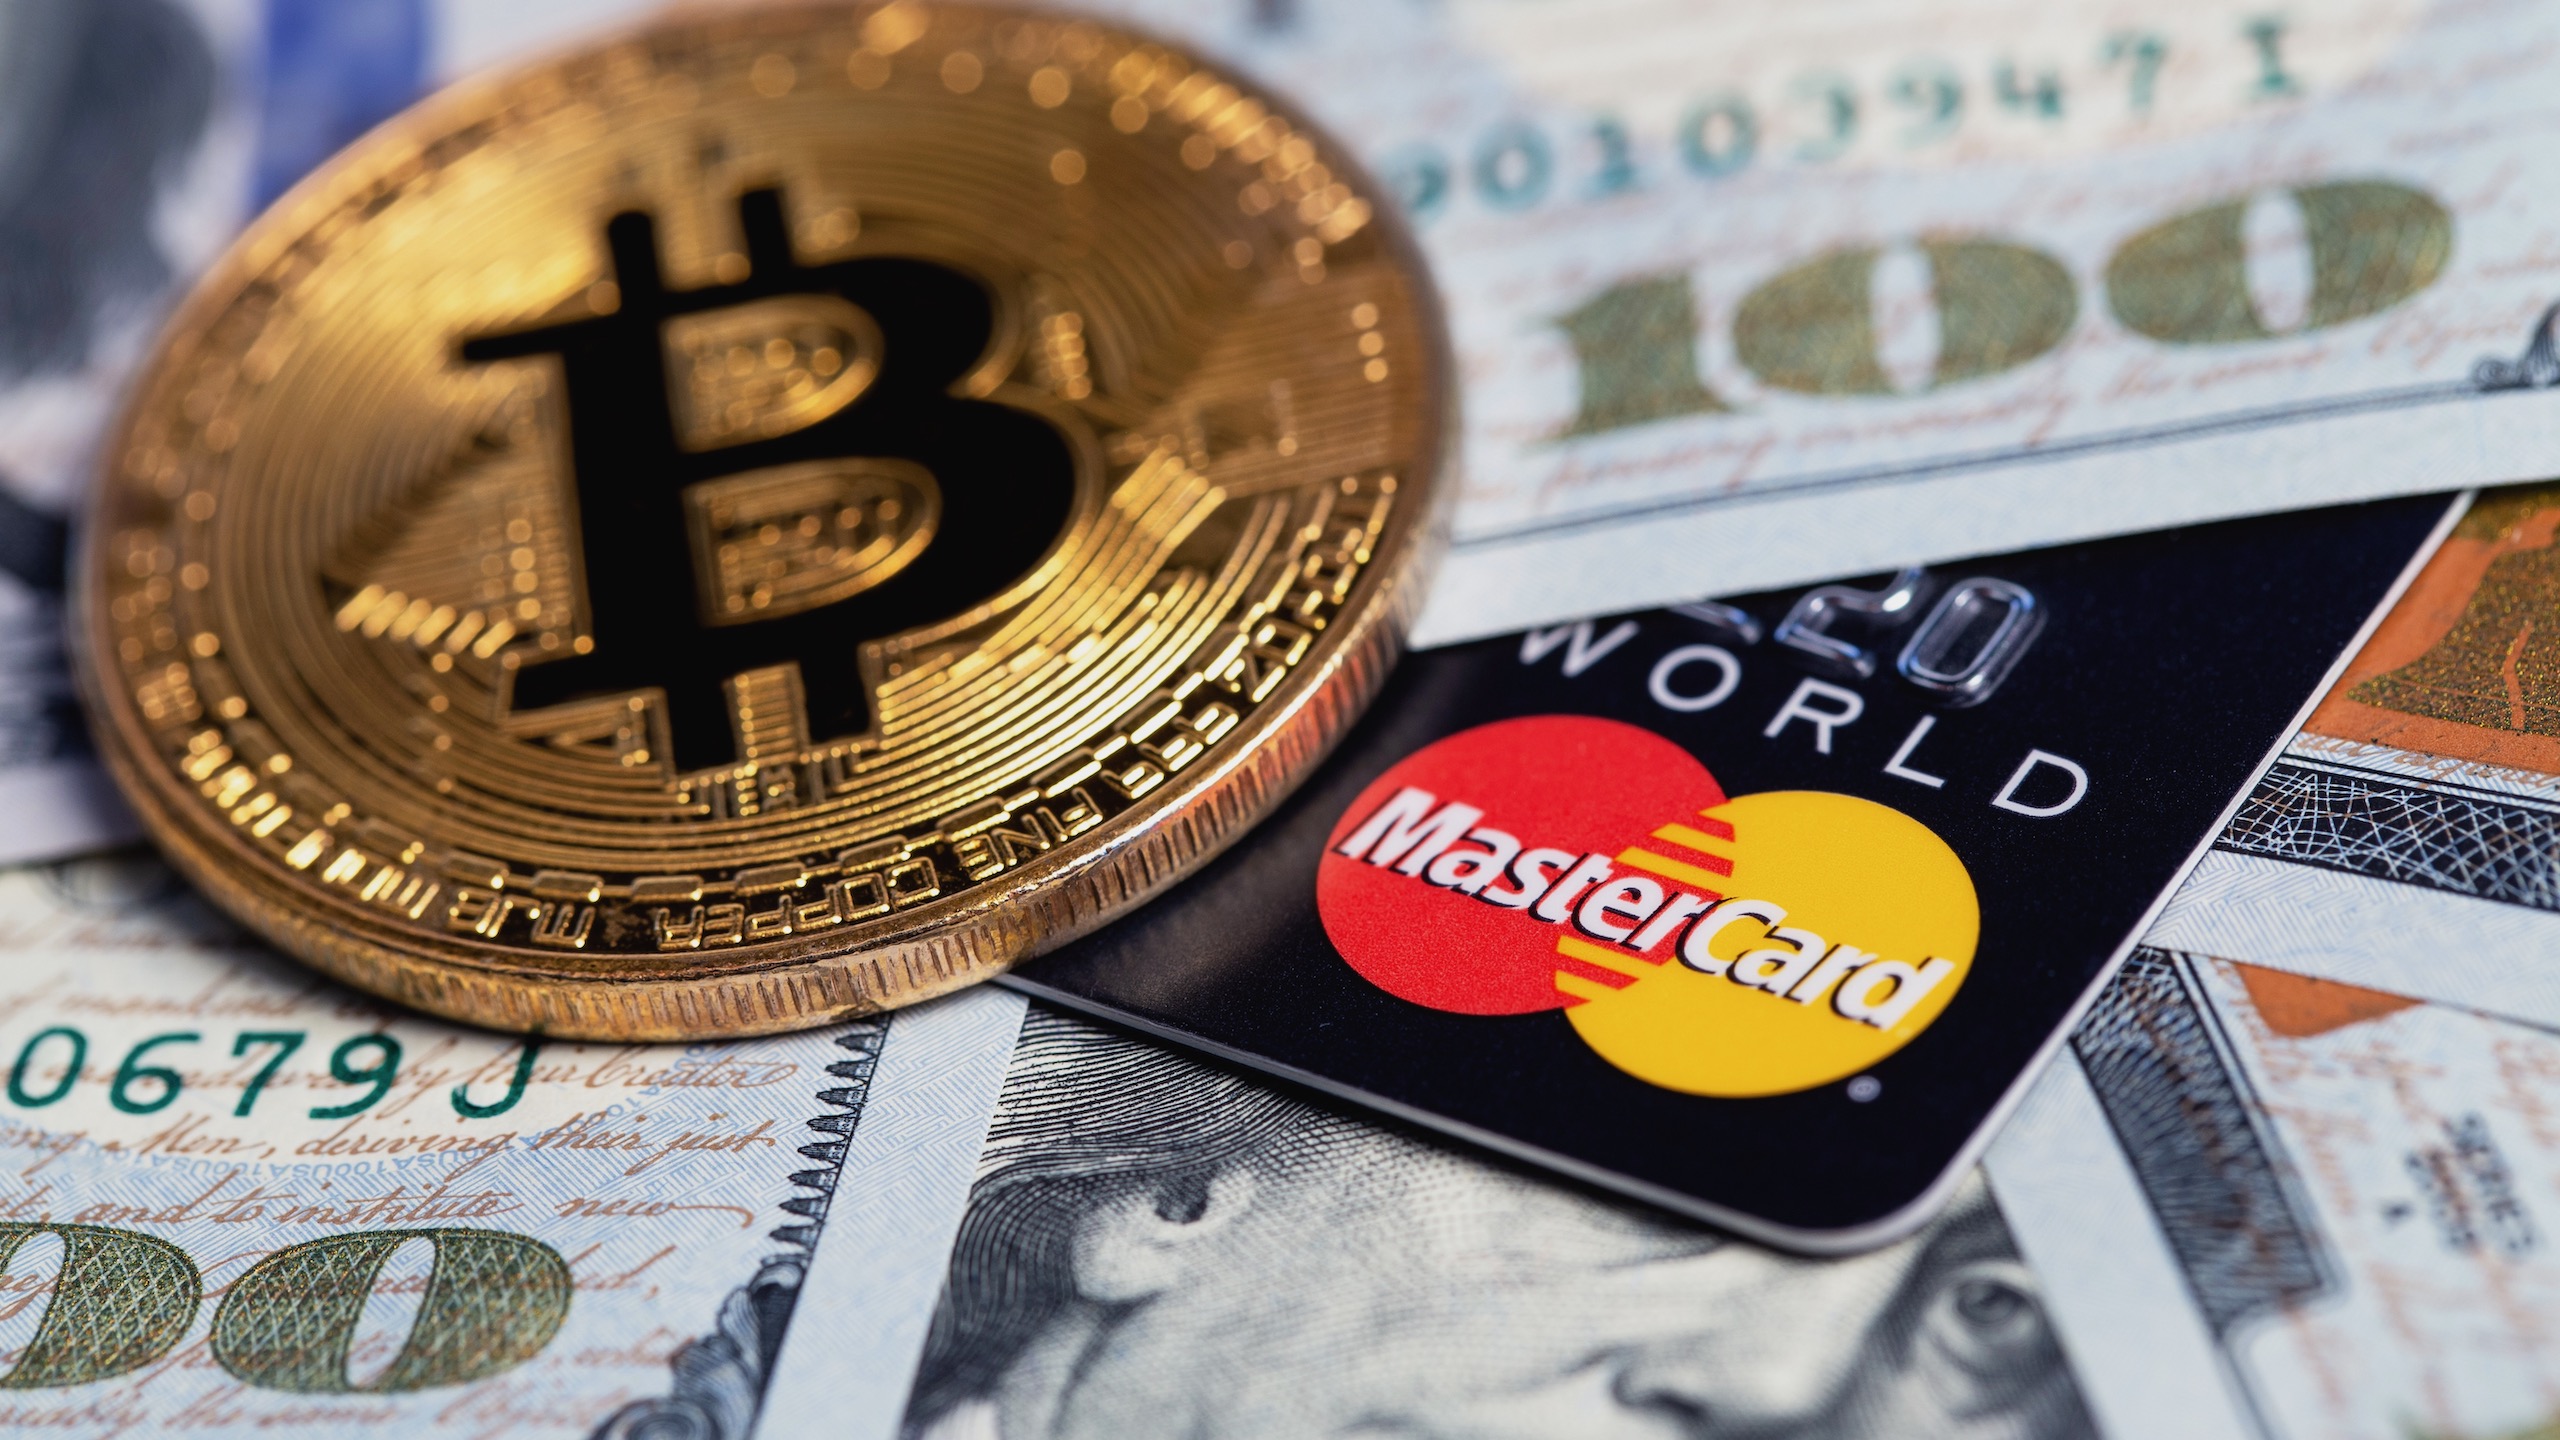 Mastercard lanceert Crypto Credential om 'vertrouwen' te brengen in Blockchain